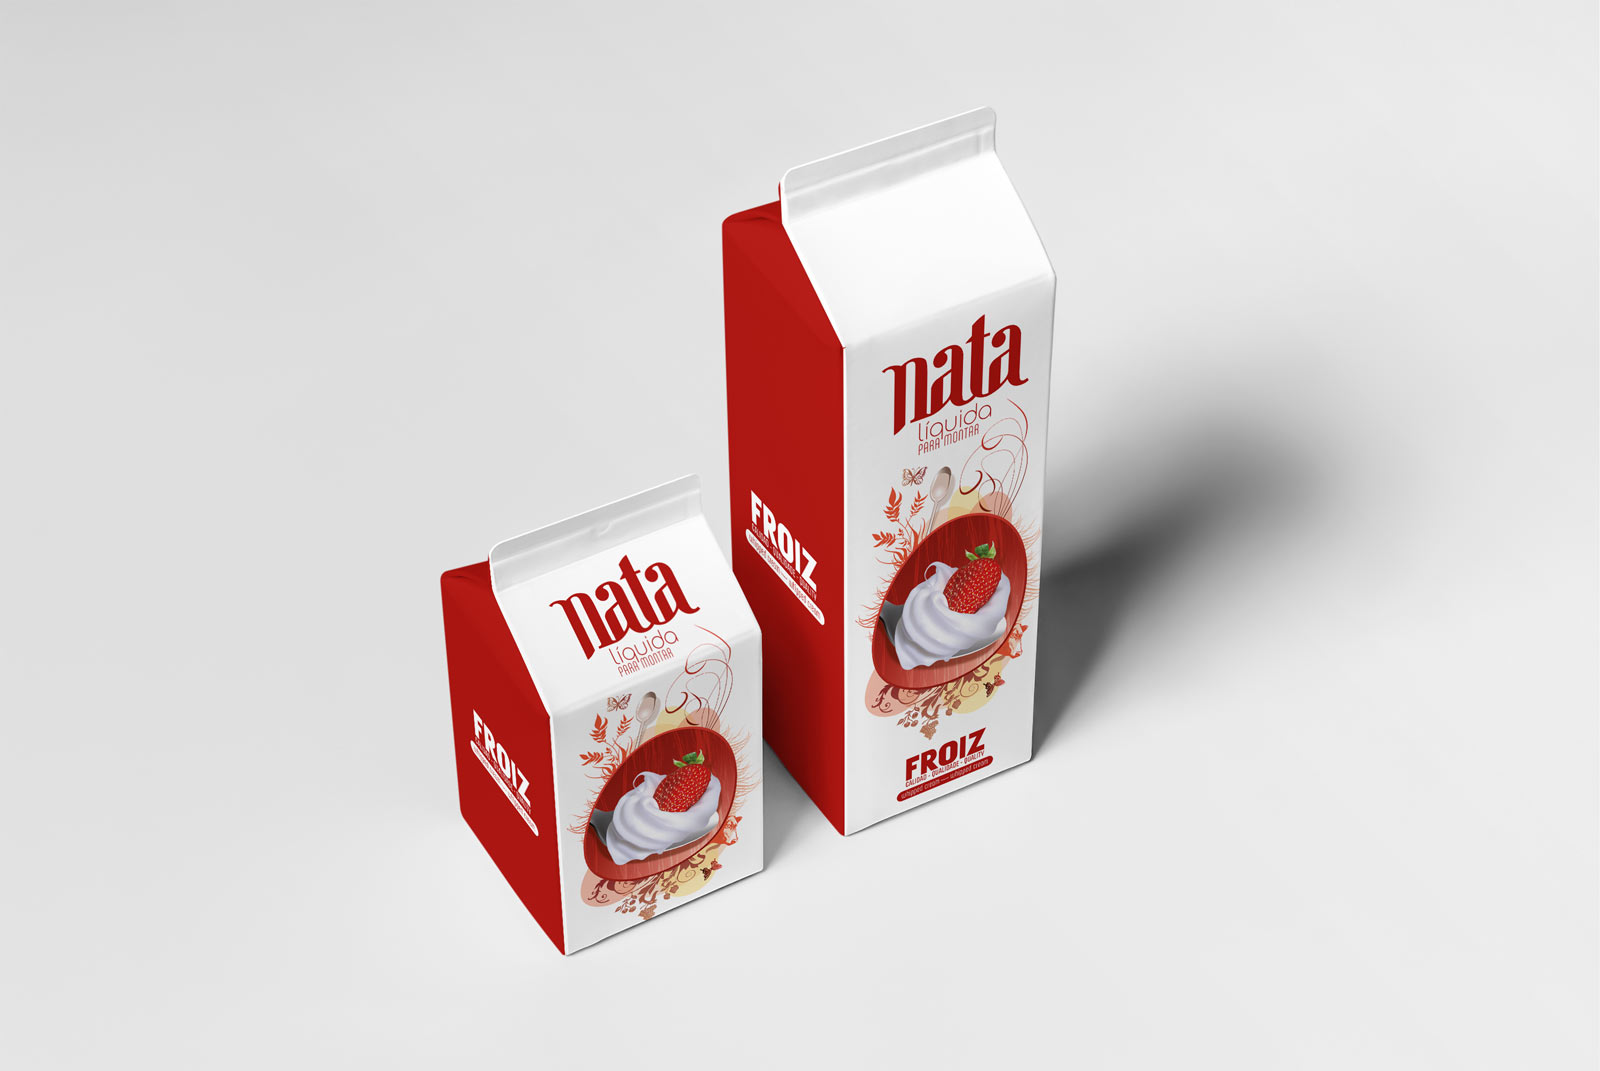 Froiz-nata-packaging-03